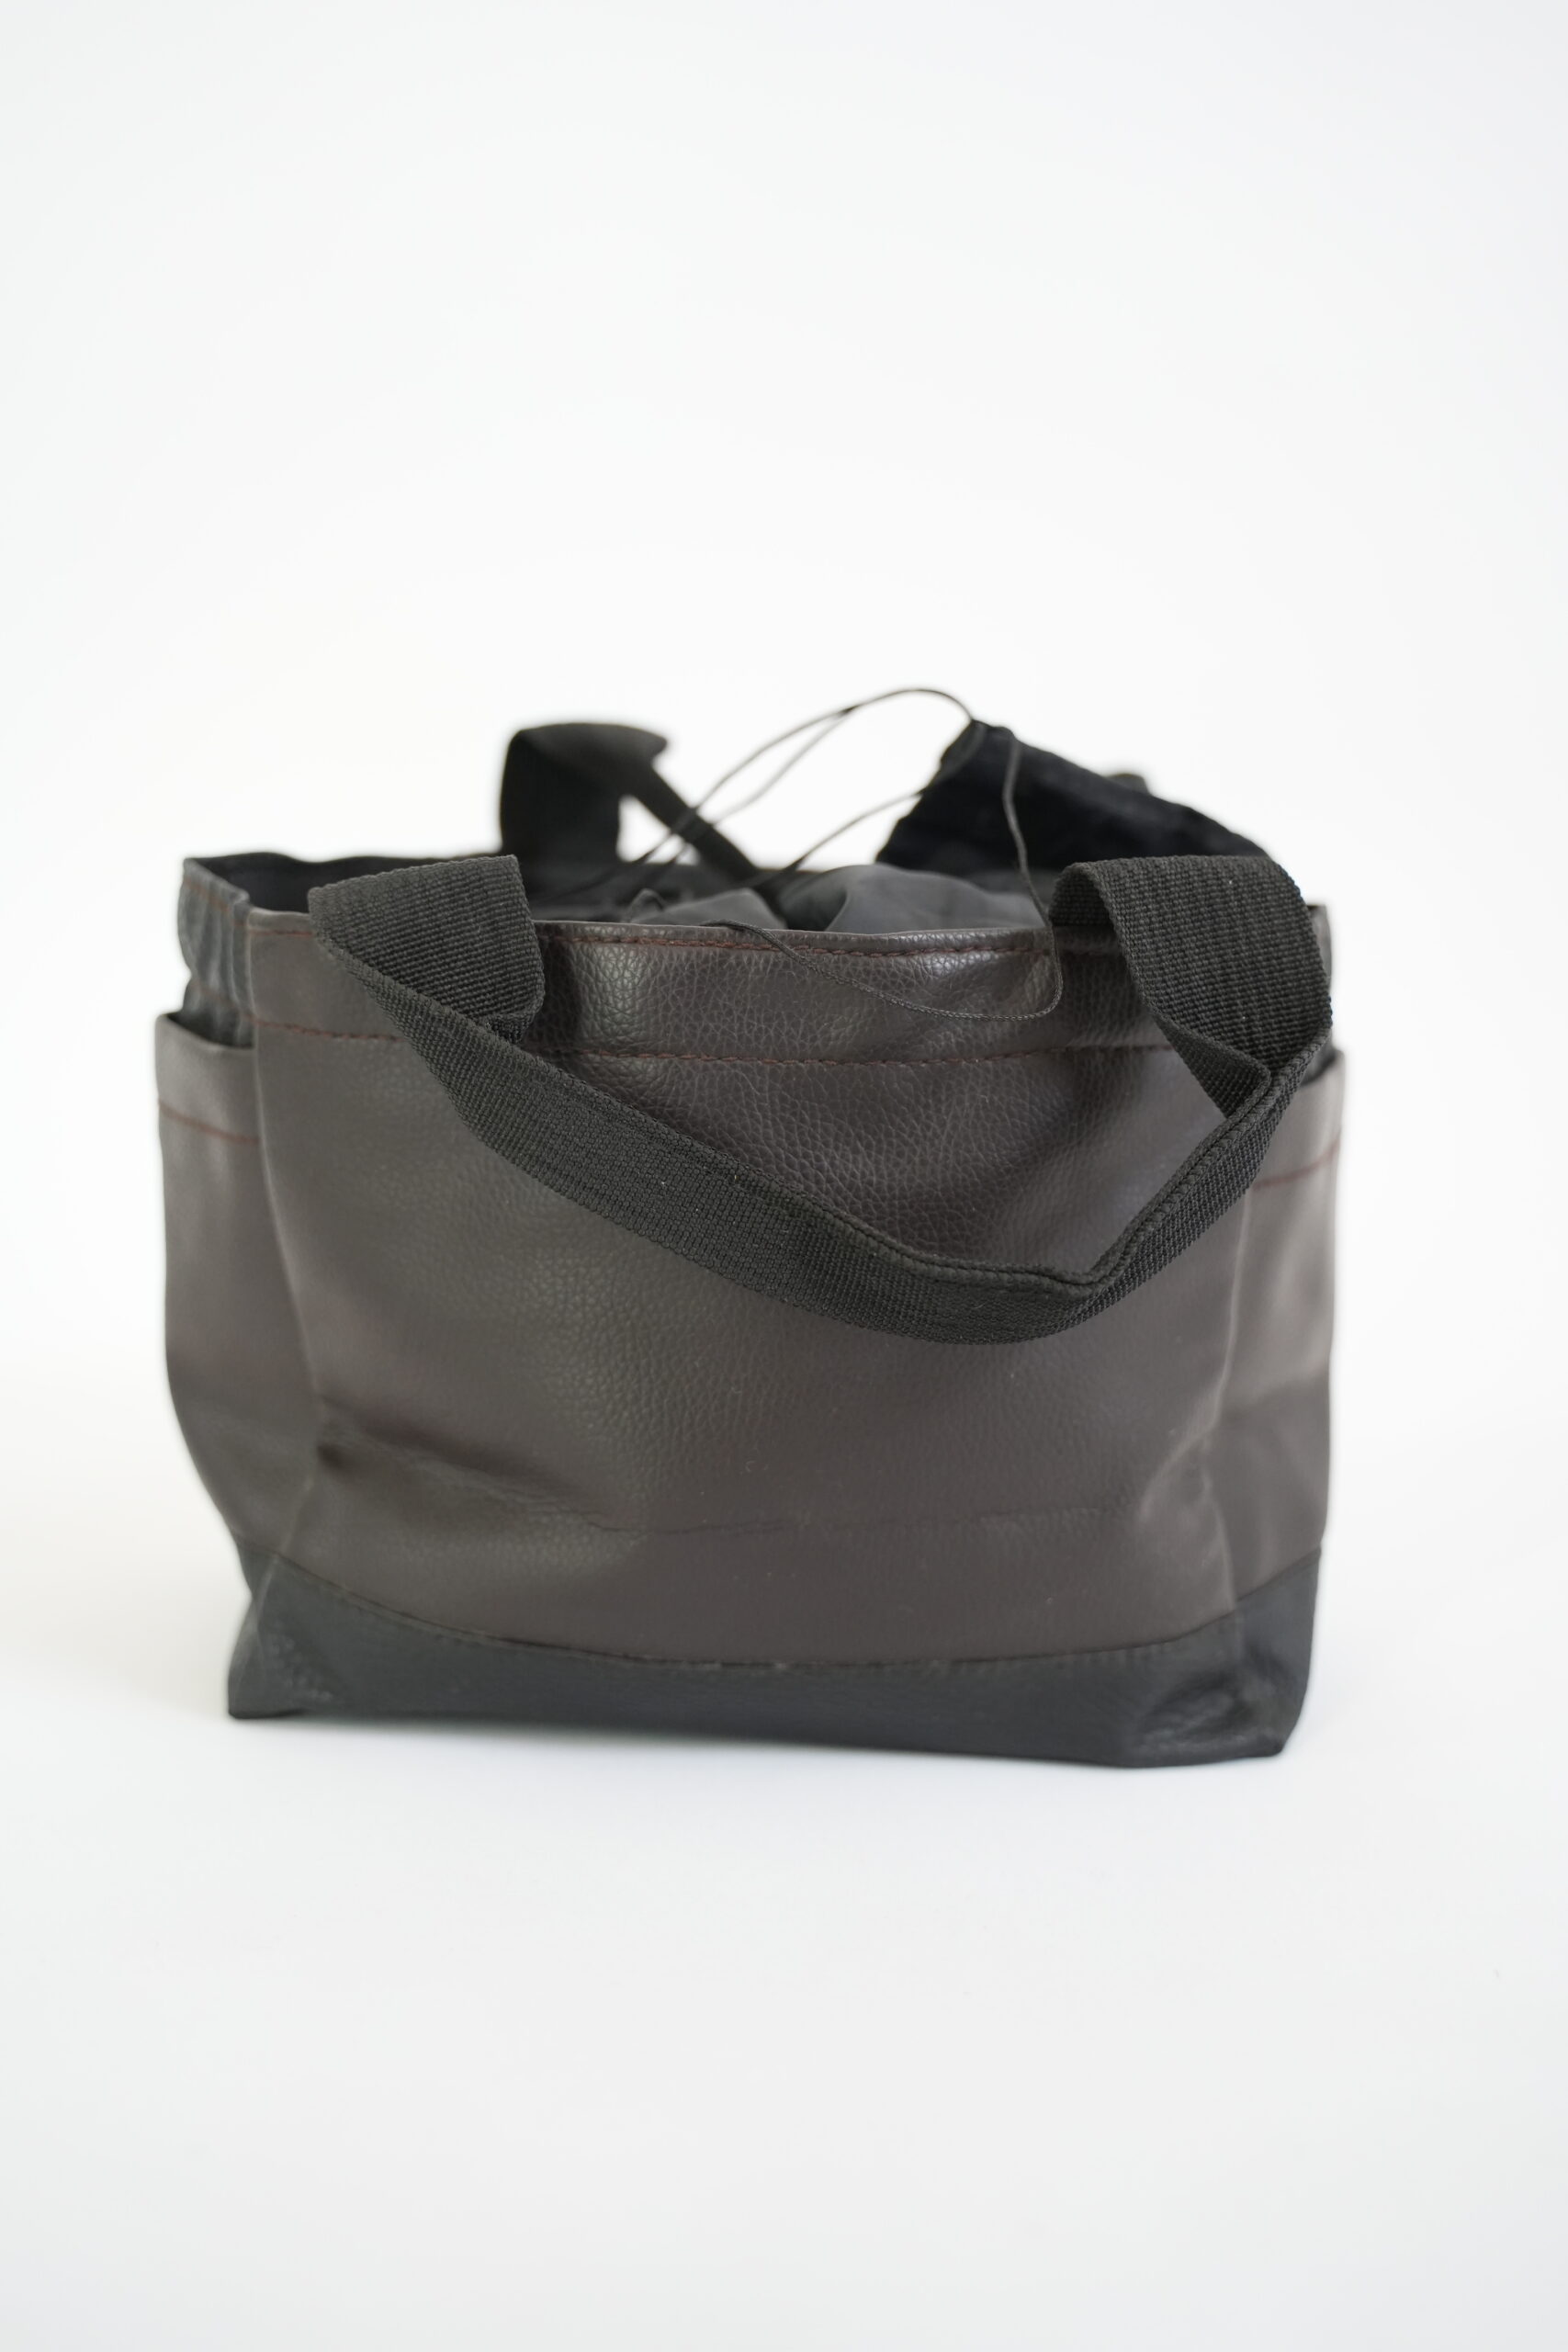 Brown and Black Handbag for Women